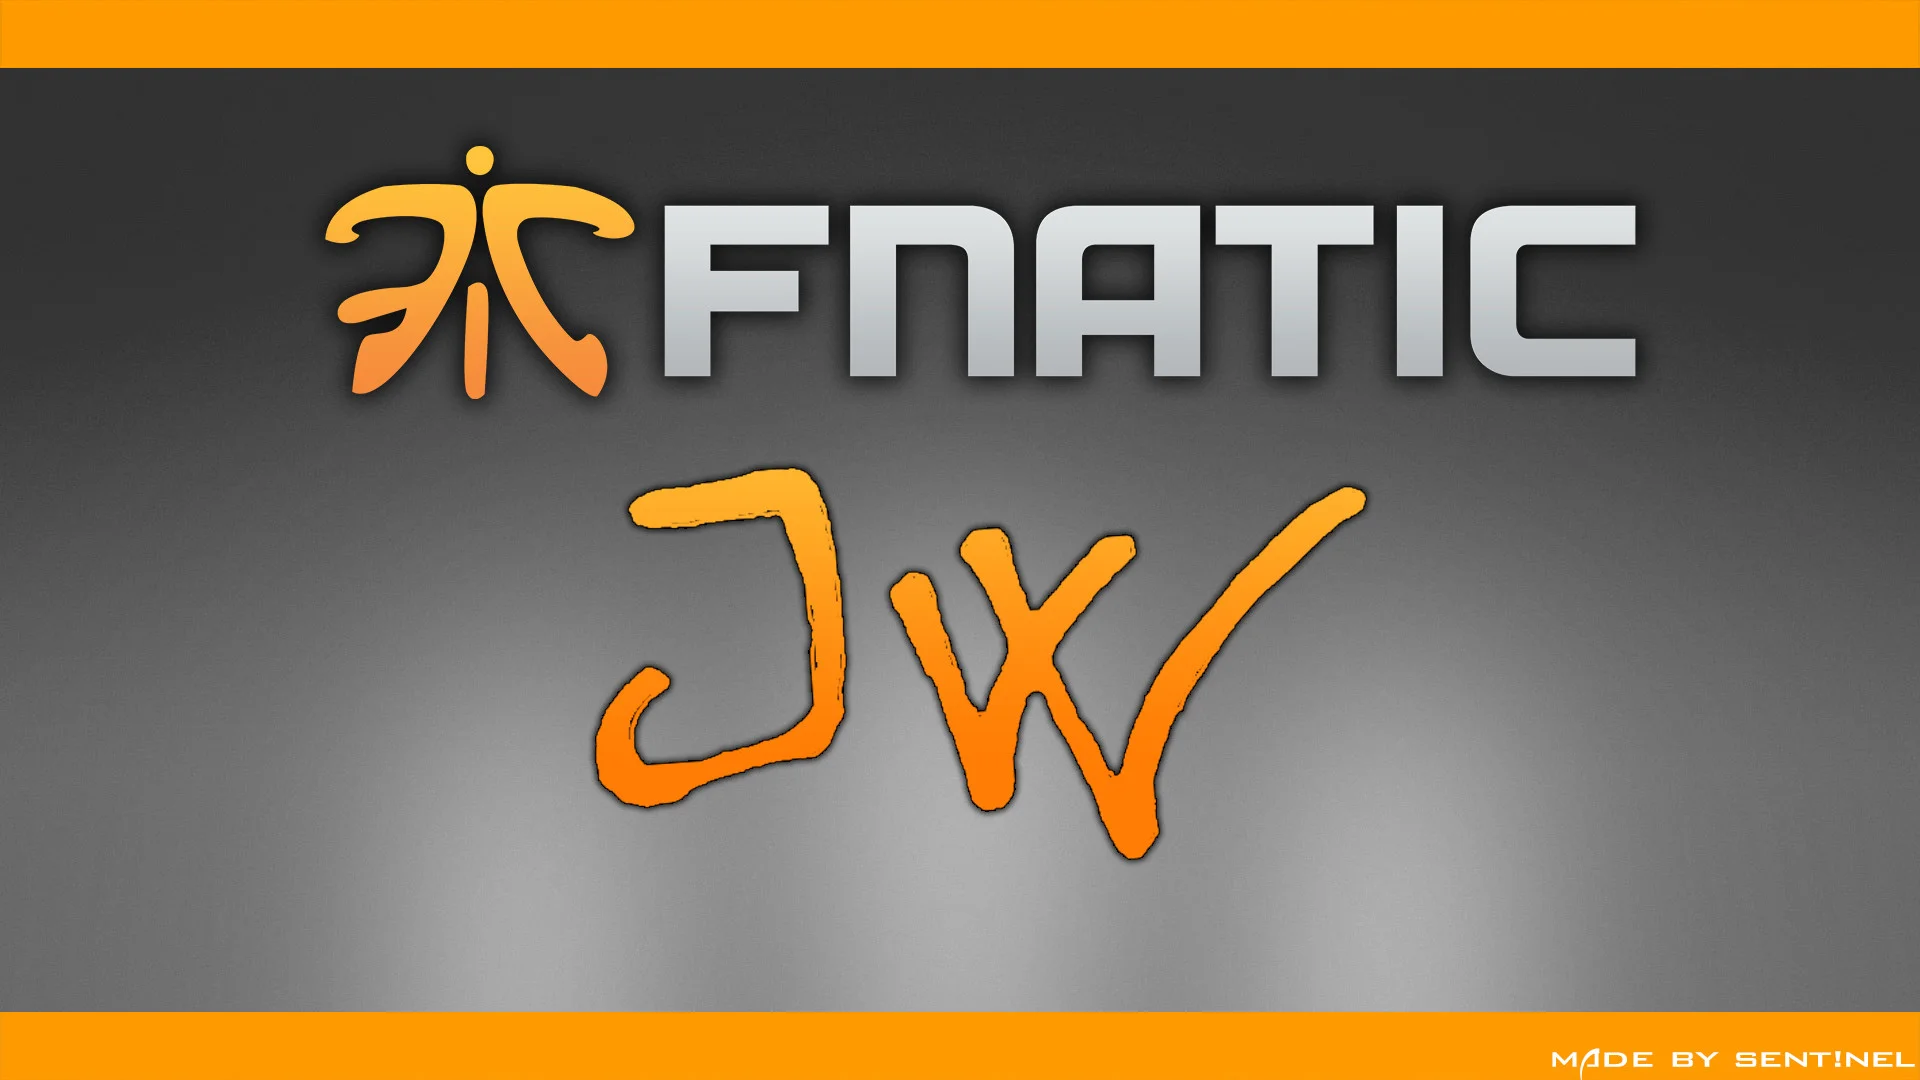 Fnatic jw wallpaper cs go wallpapers jw logo wallpaper wallpapersafari